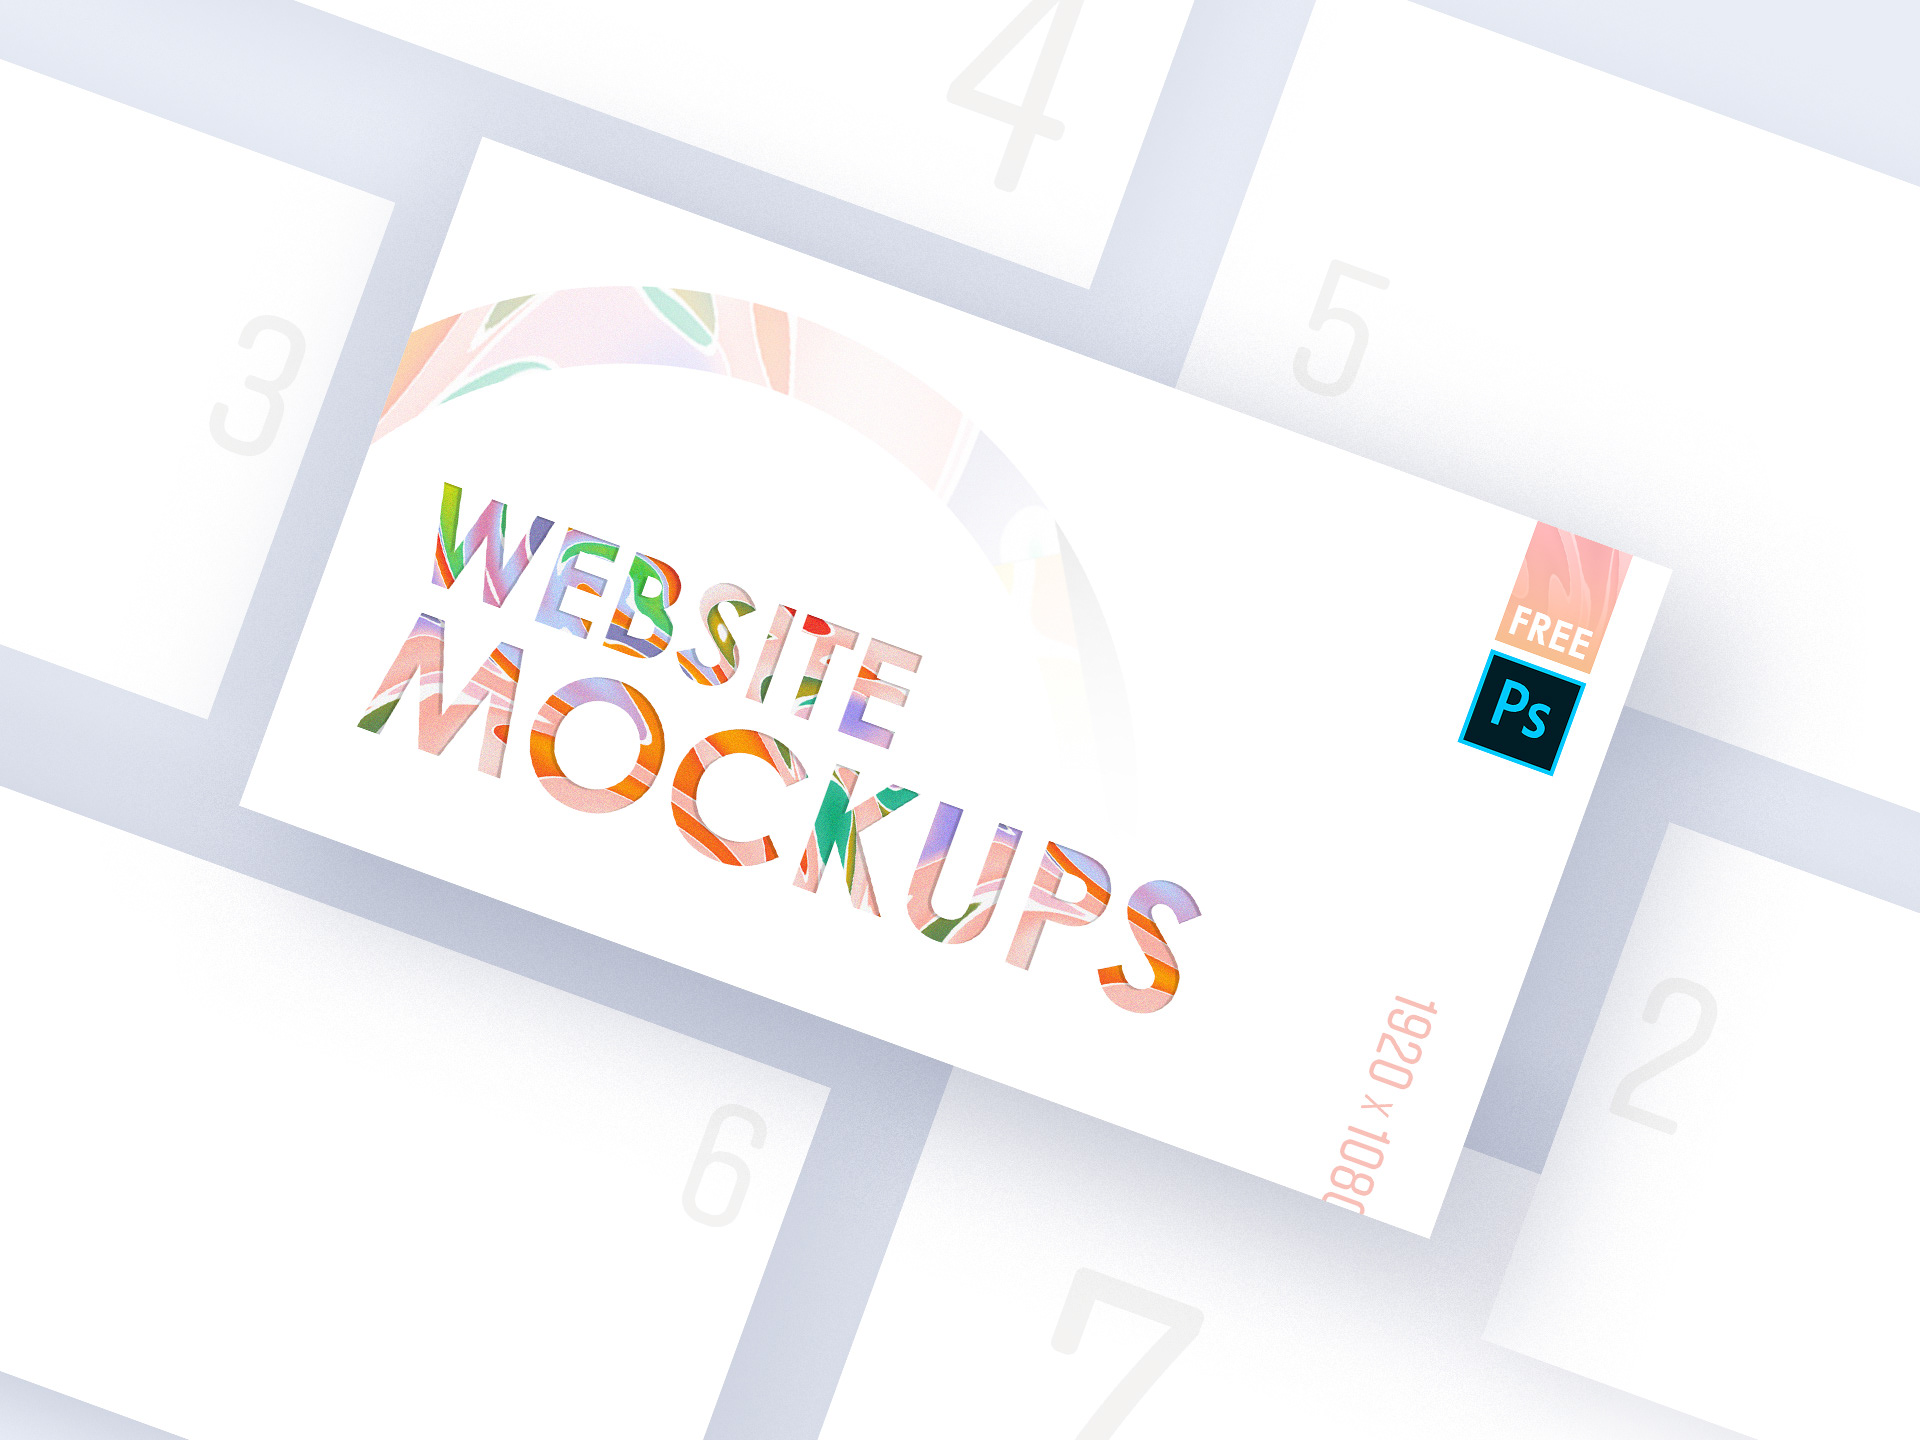 Web Mockup Pack